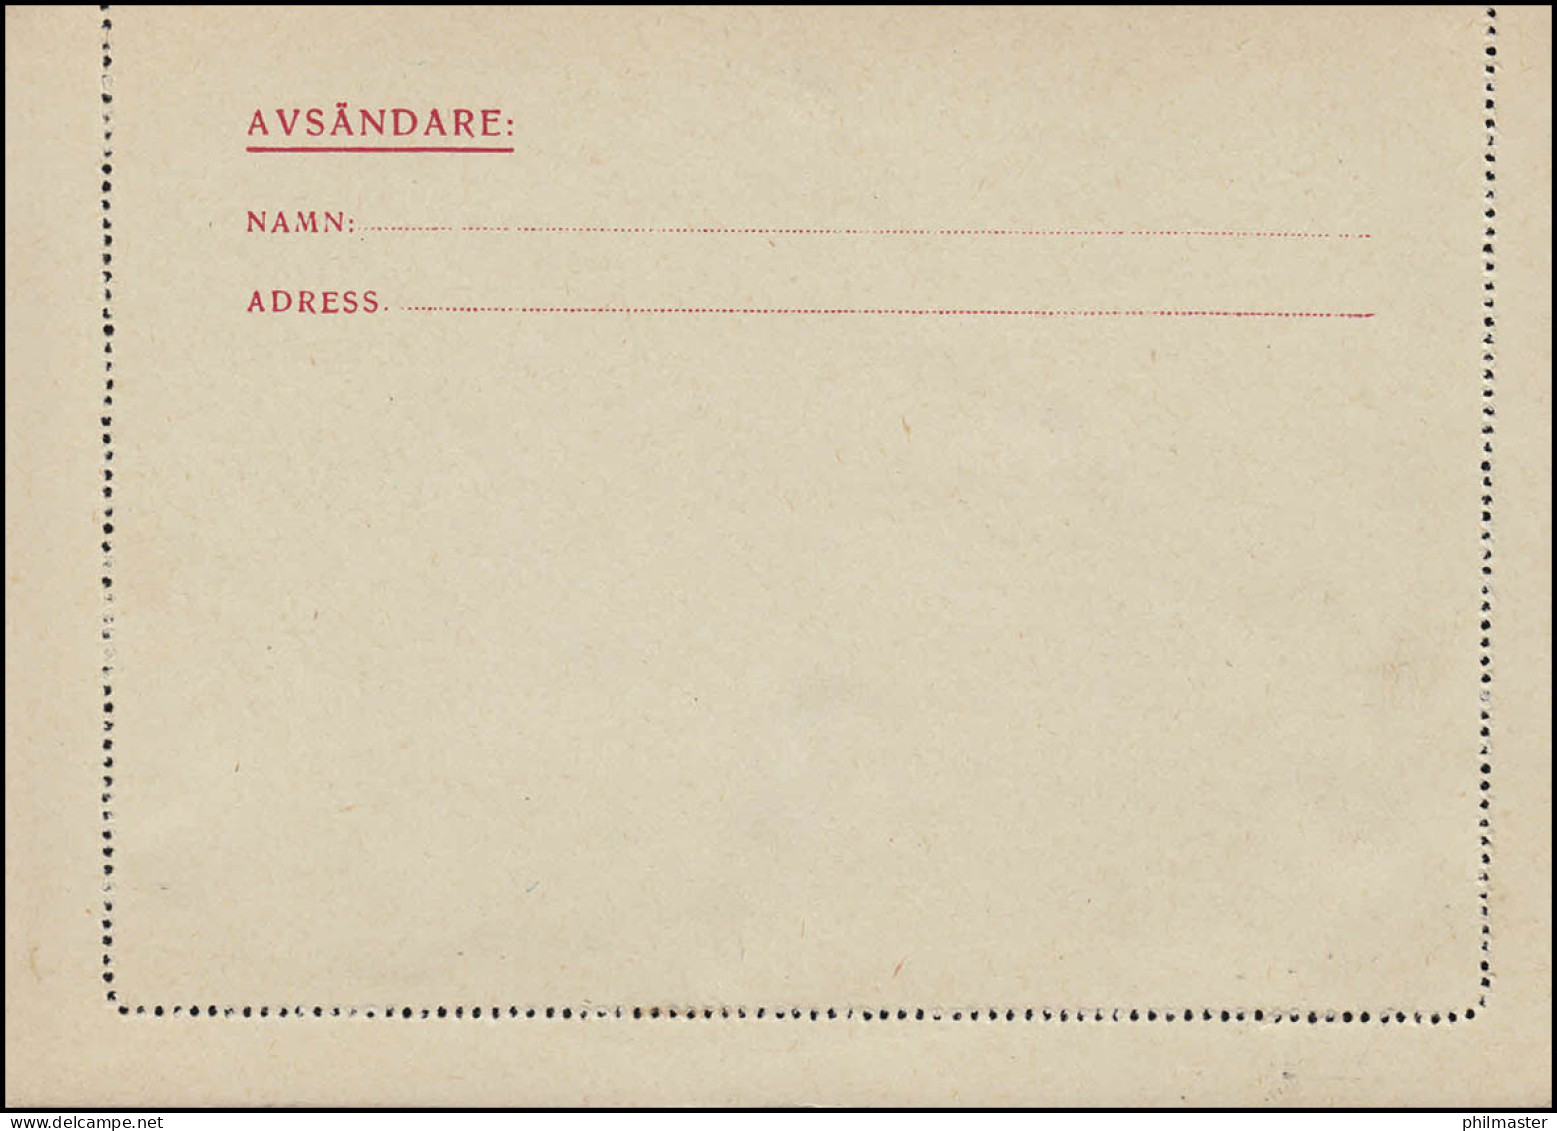 Kartenbrief K 27IW KORTBREV 15 Öre, STOCKHOLM 10.10.1930 Nach Göteborg - Postal Stationery